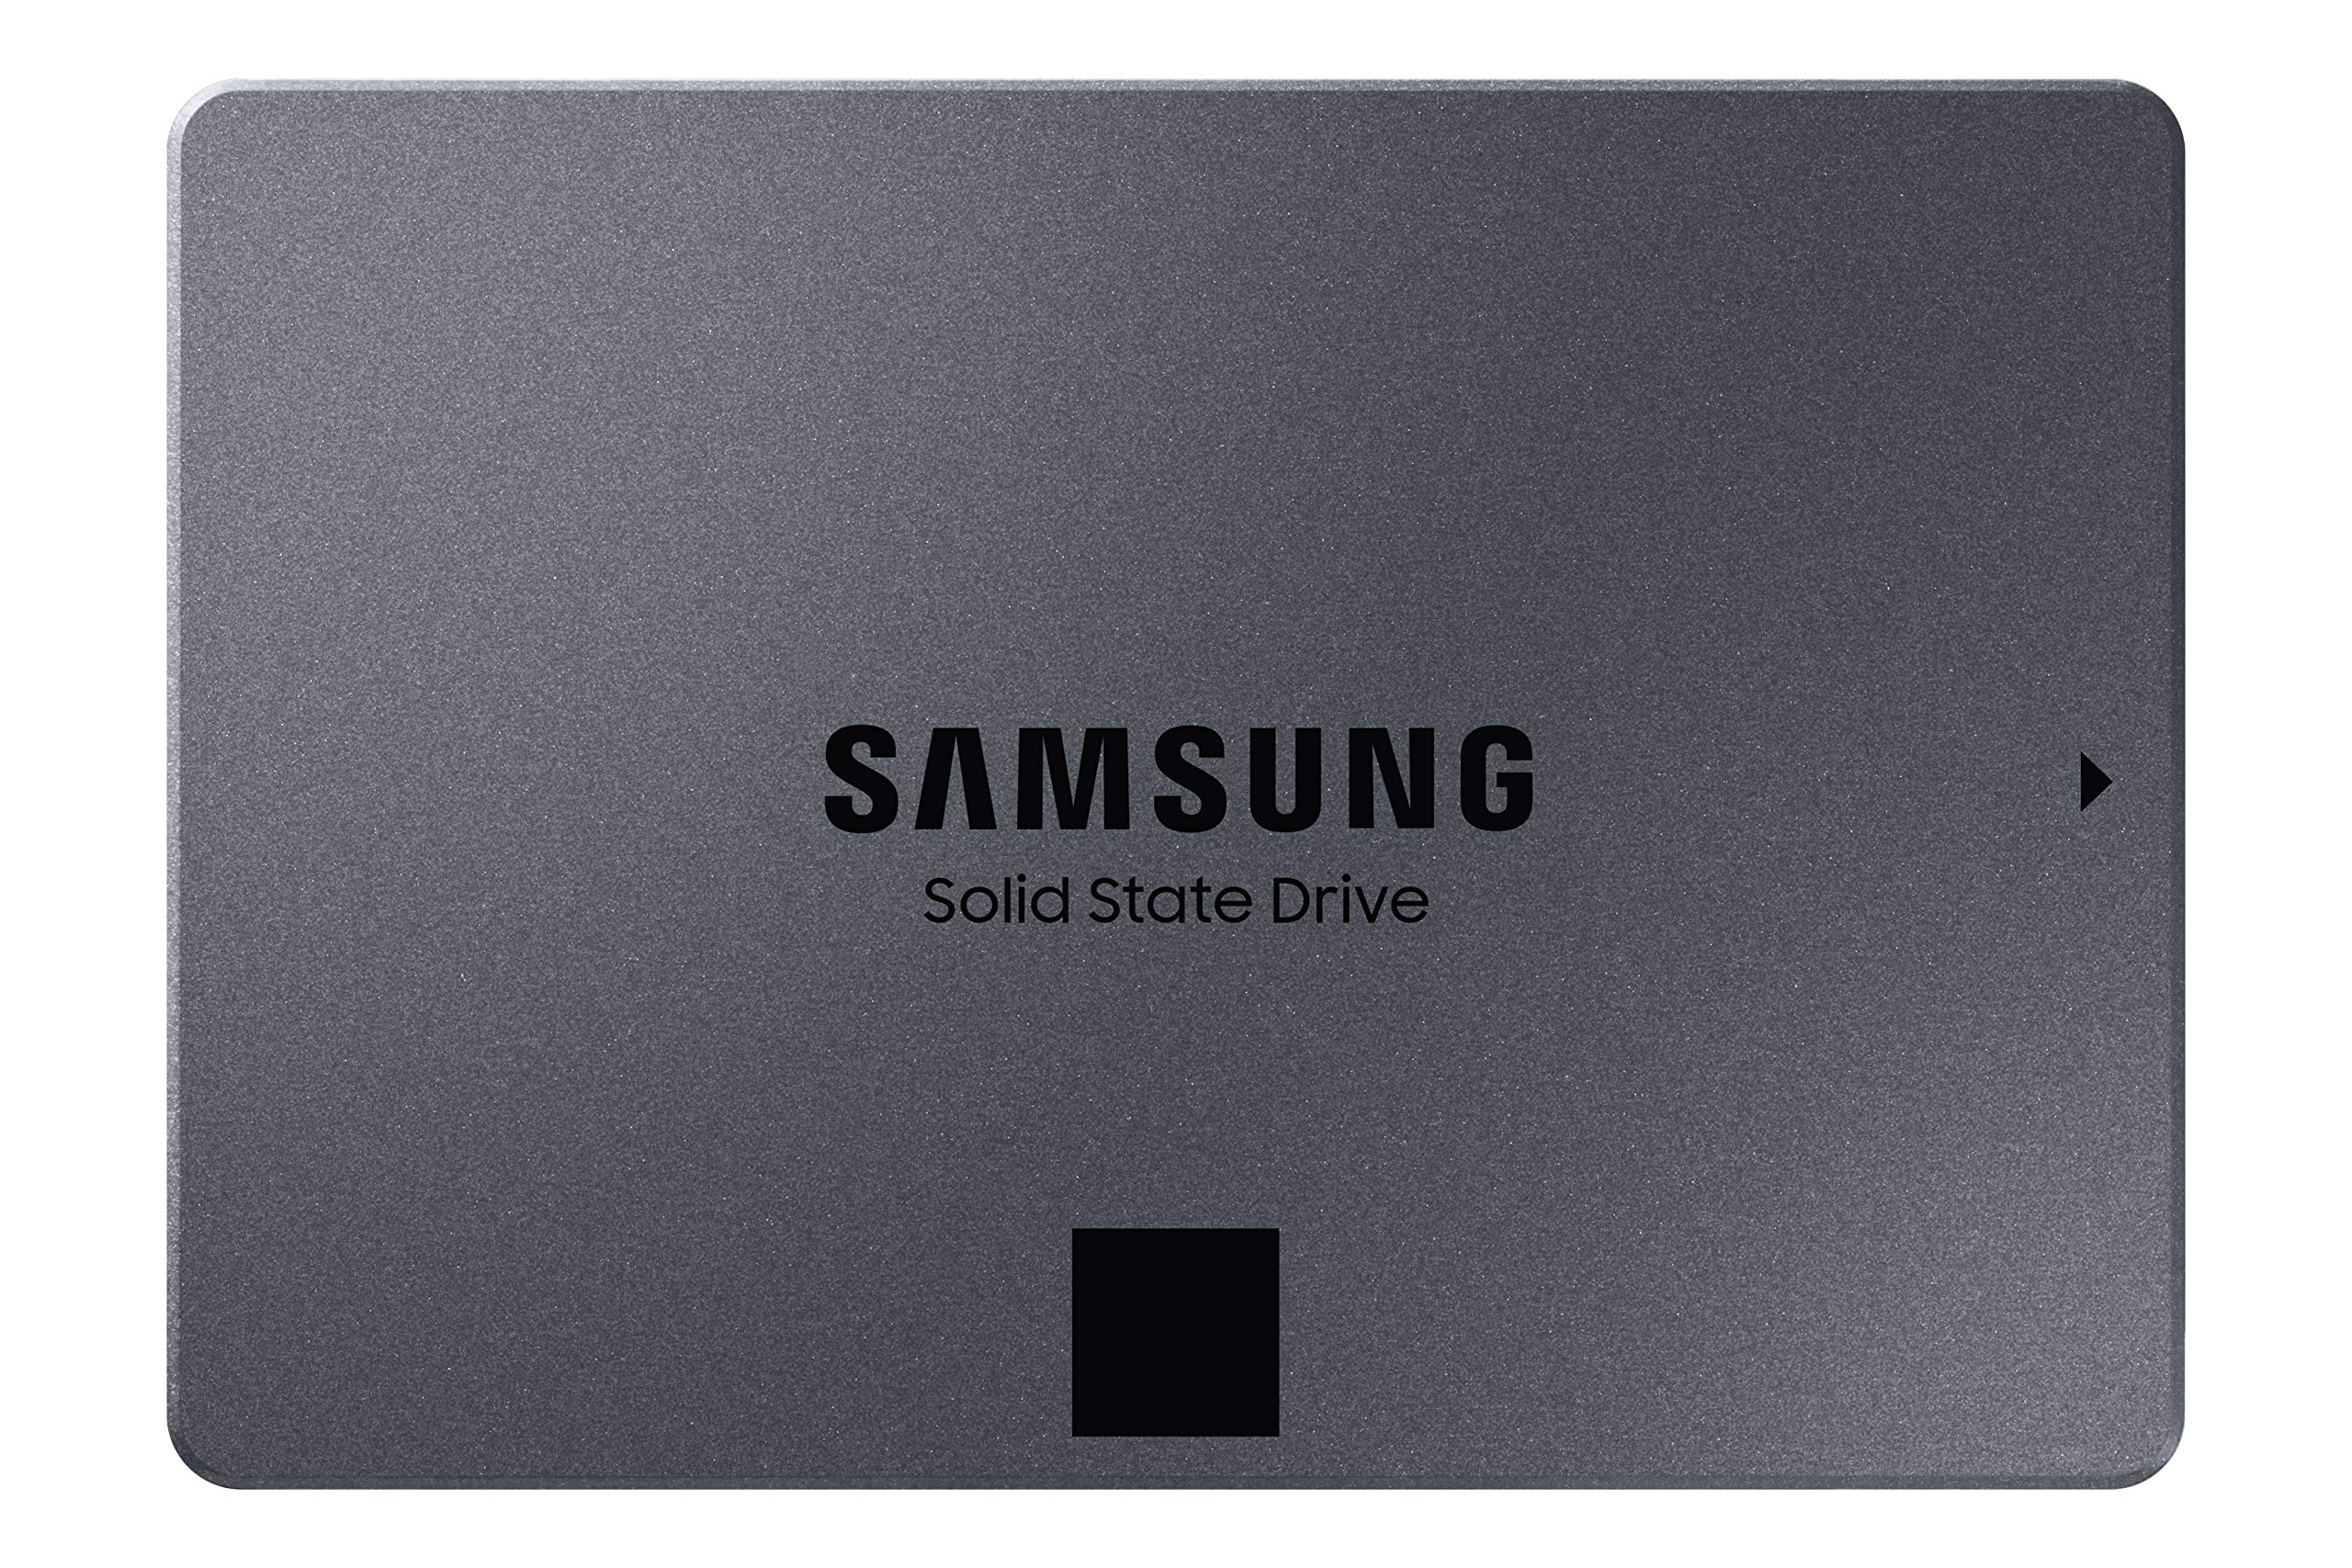 SAMSUNG 870 QVO SATA III SSD 4TB 2.5" Internal Solid State Drive $291 Prime Free Shipping $290.39